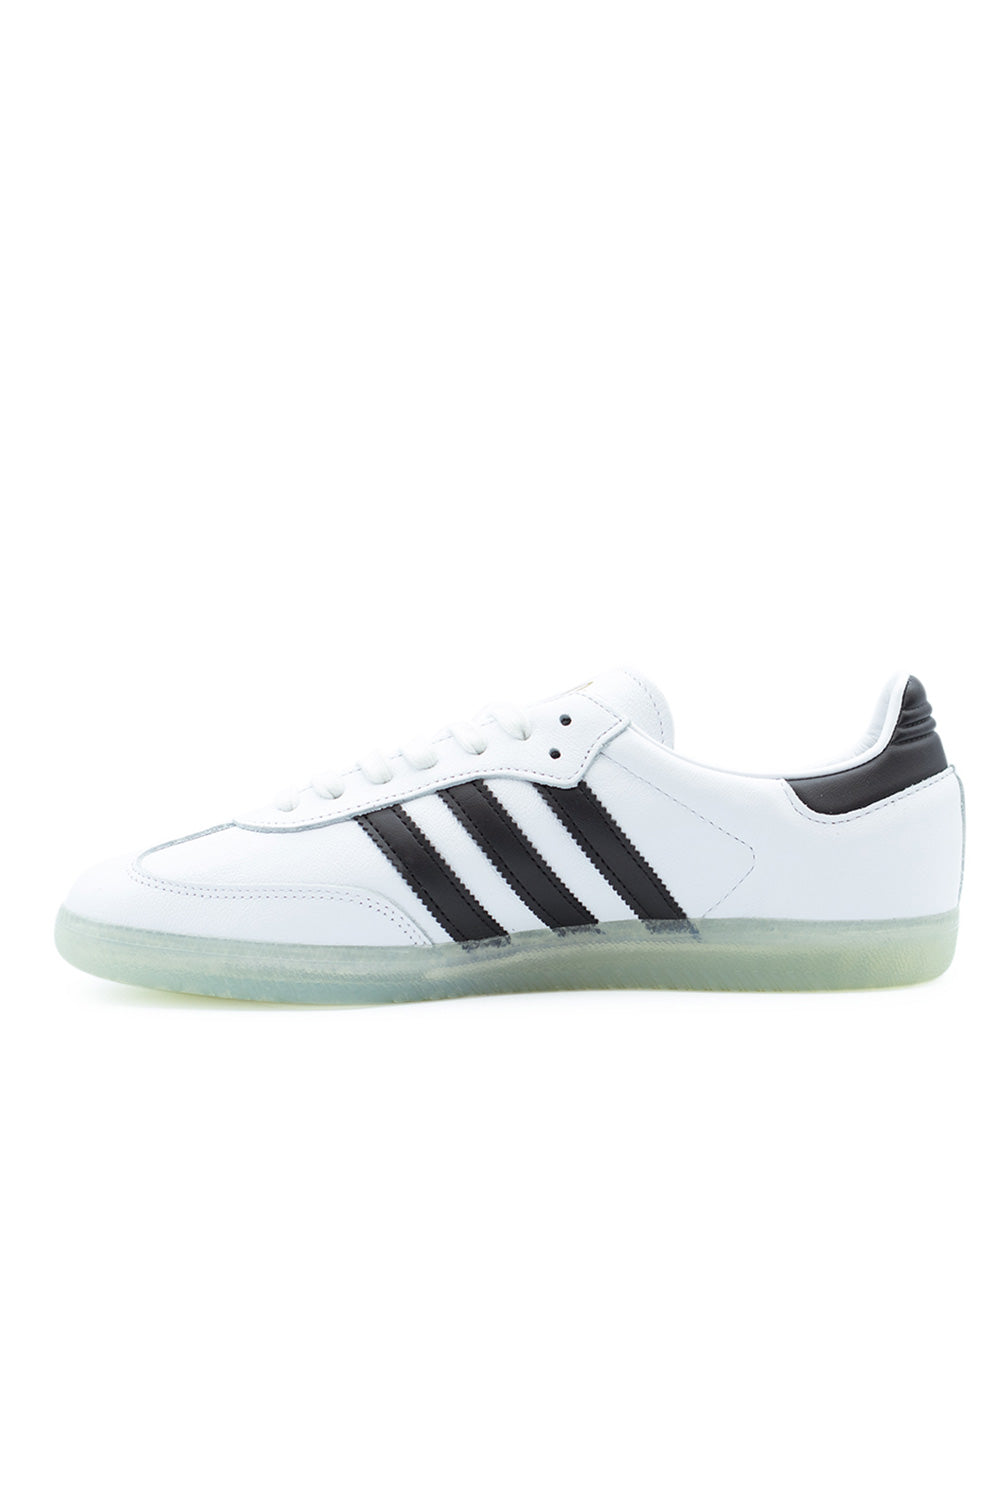 Adidas Samba Shoe (Jason Dill) White / Black / Gold - BONKERS